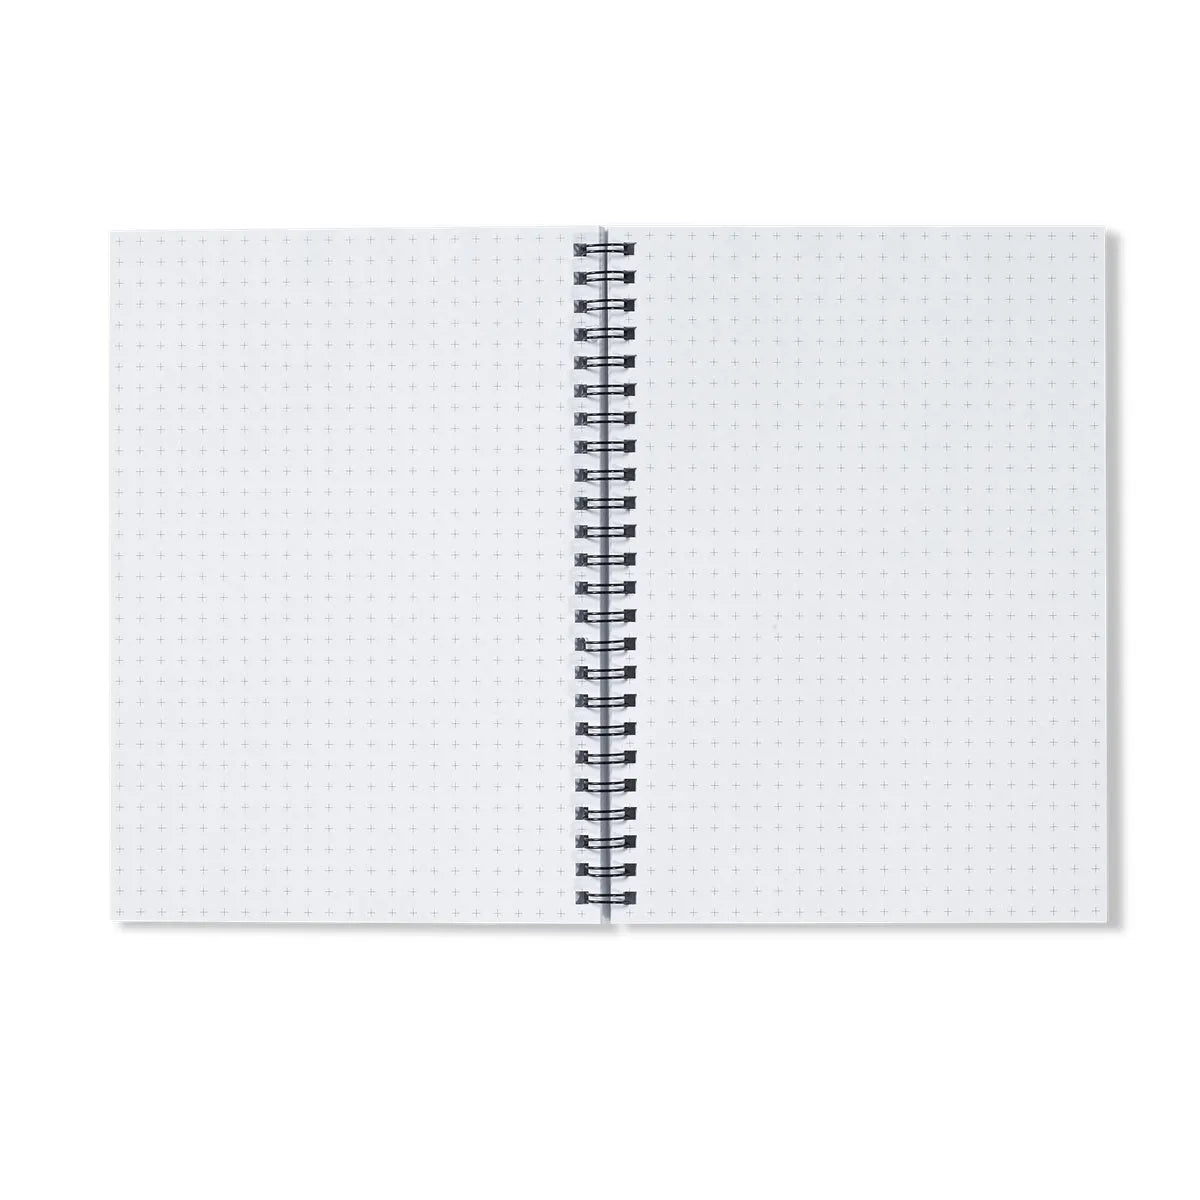 Monkey Do Notebook - Notebooks & Notepads - Aesthetic Art